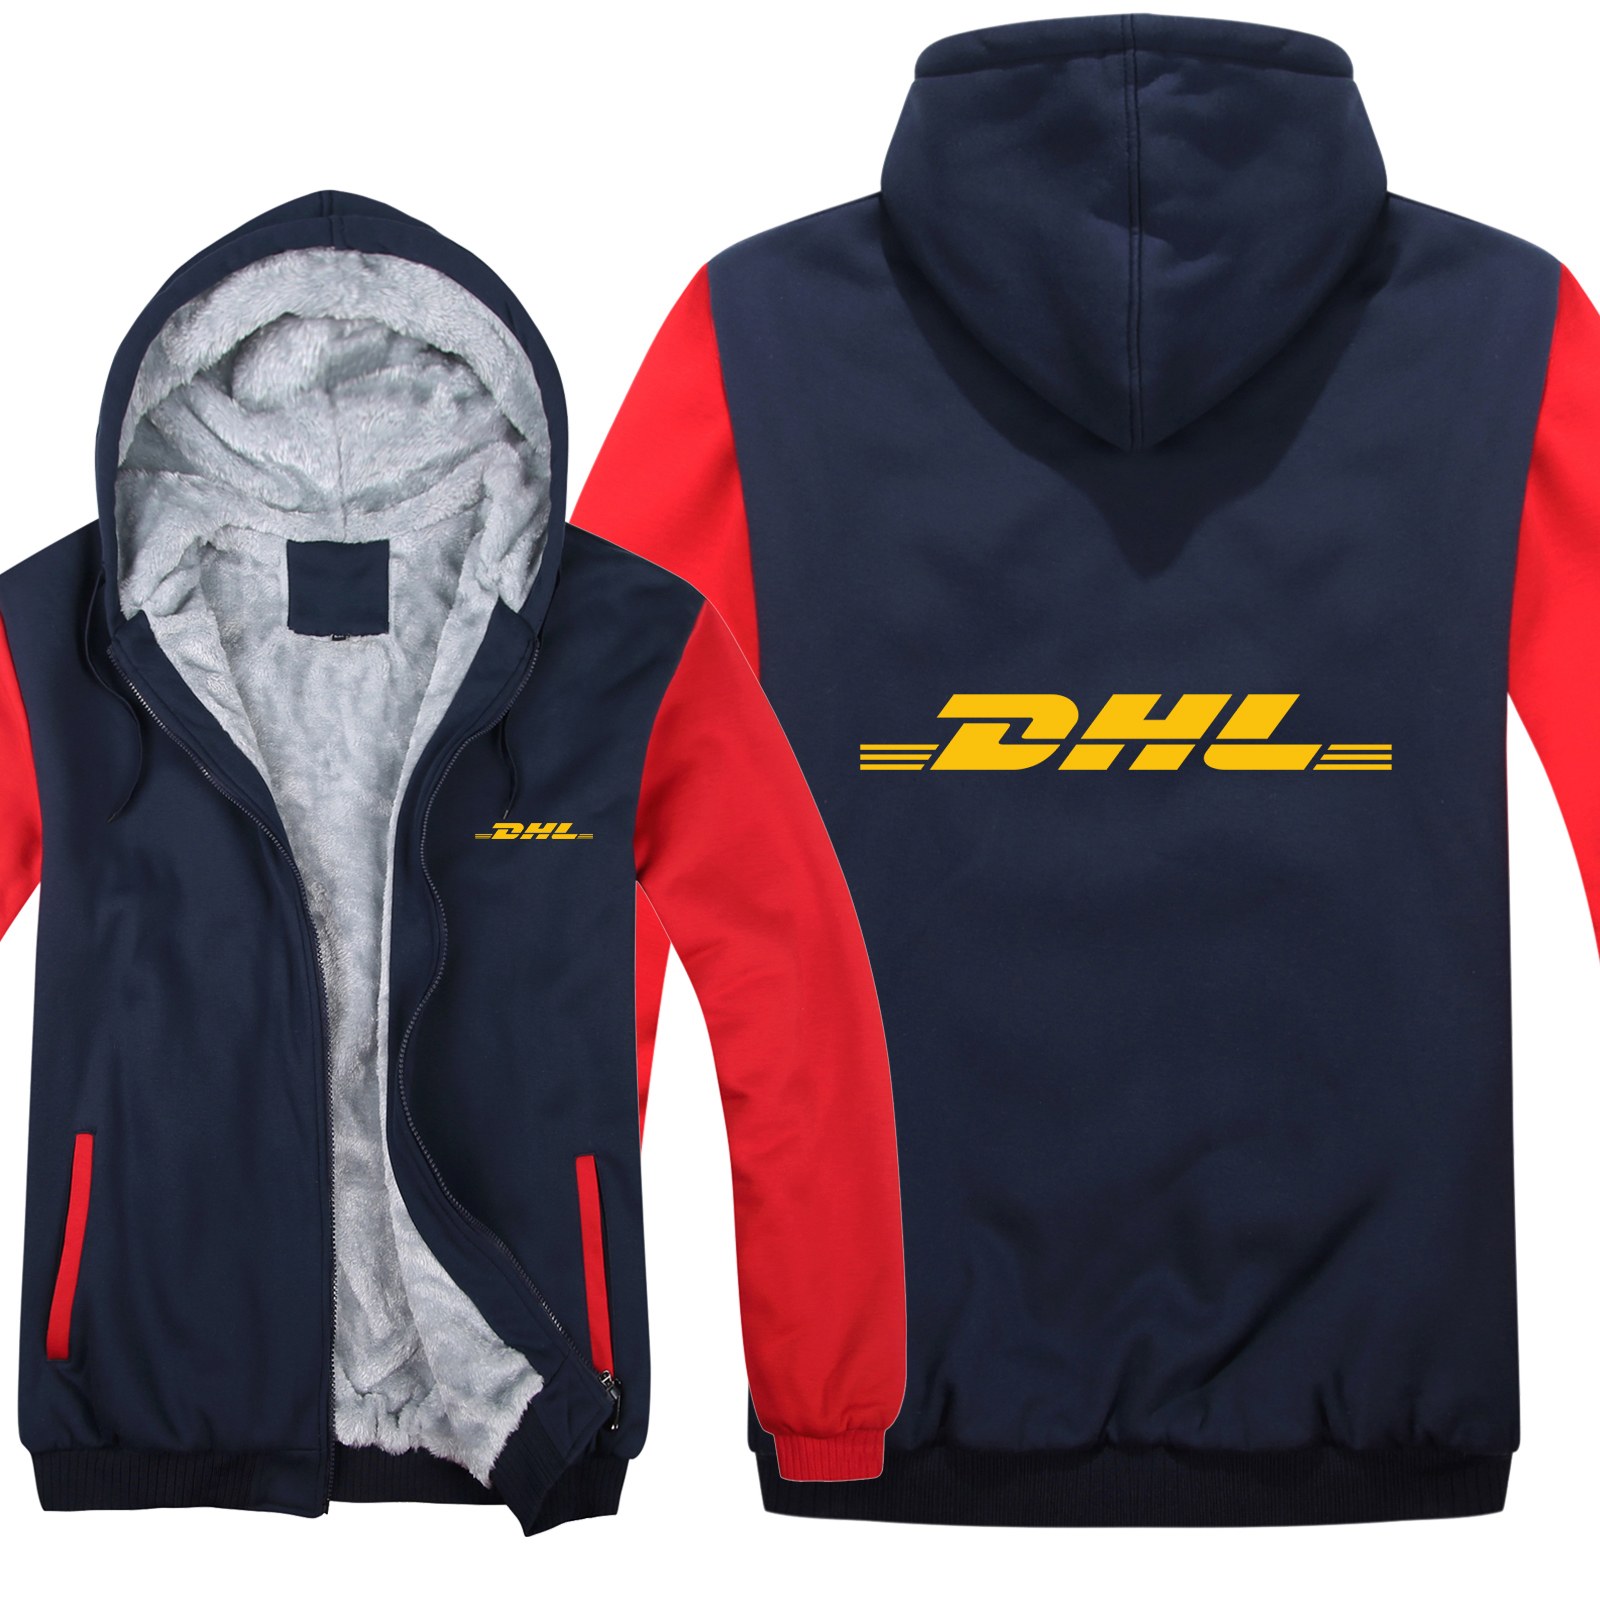 

Winter Hoodies Men Fashion Coat Pullover Wool Liner Jacket DHL Sweatshirts Hoody HS-058, As picture